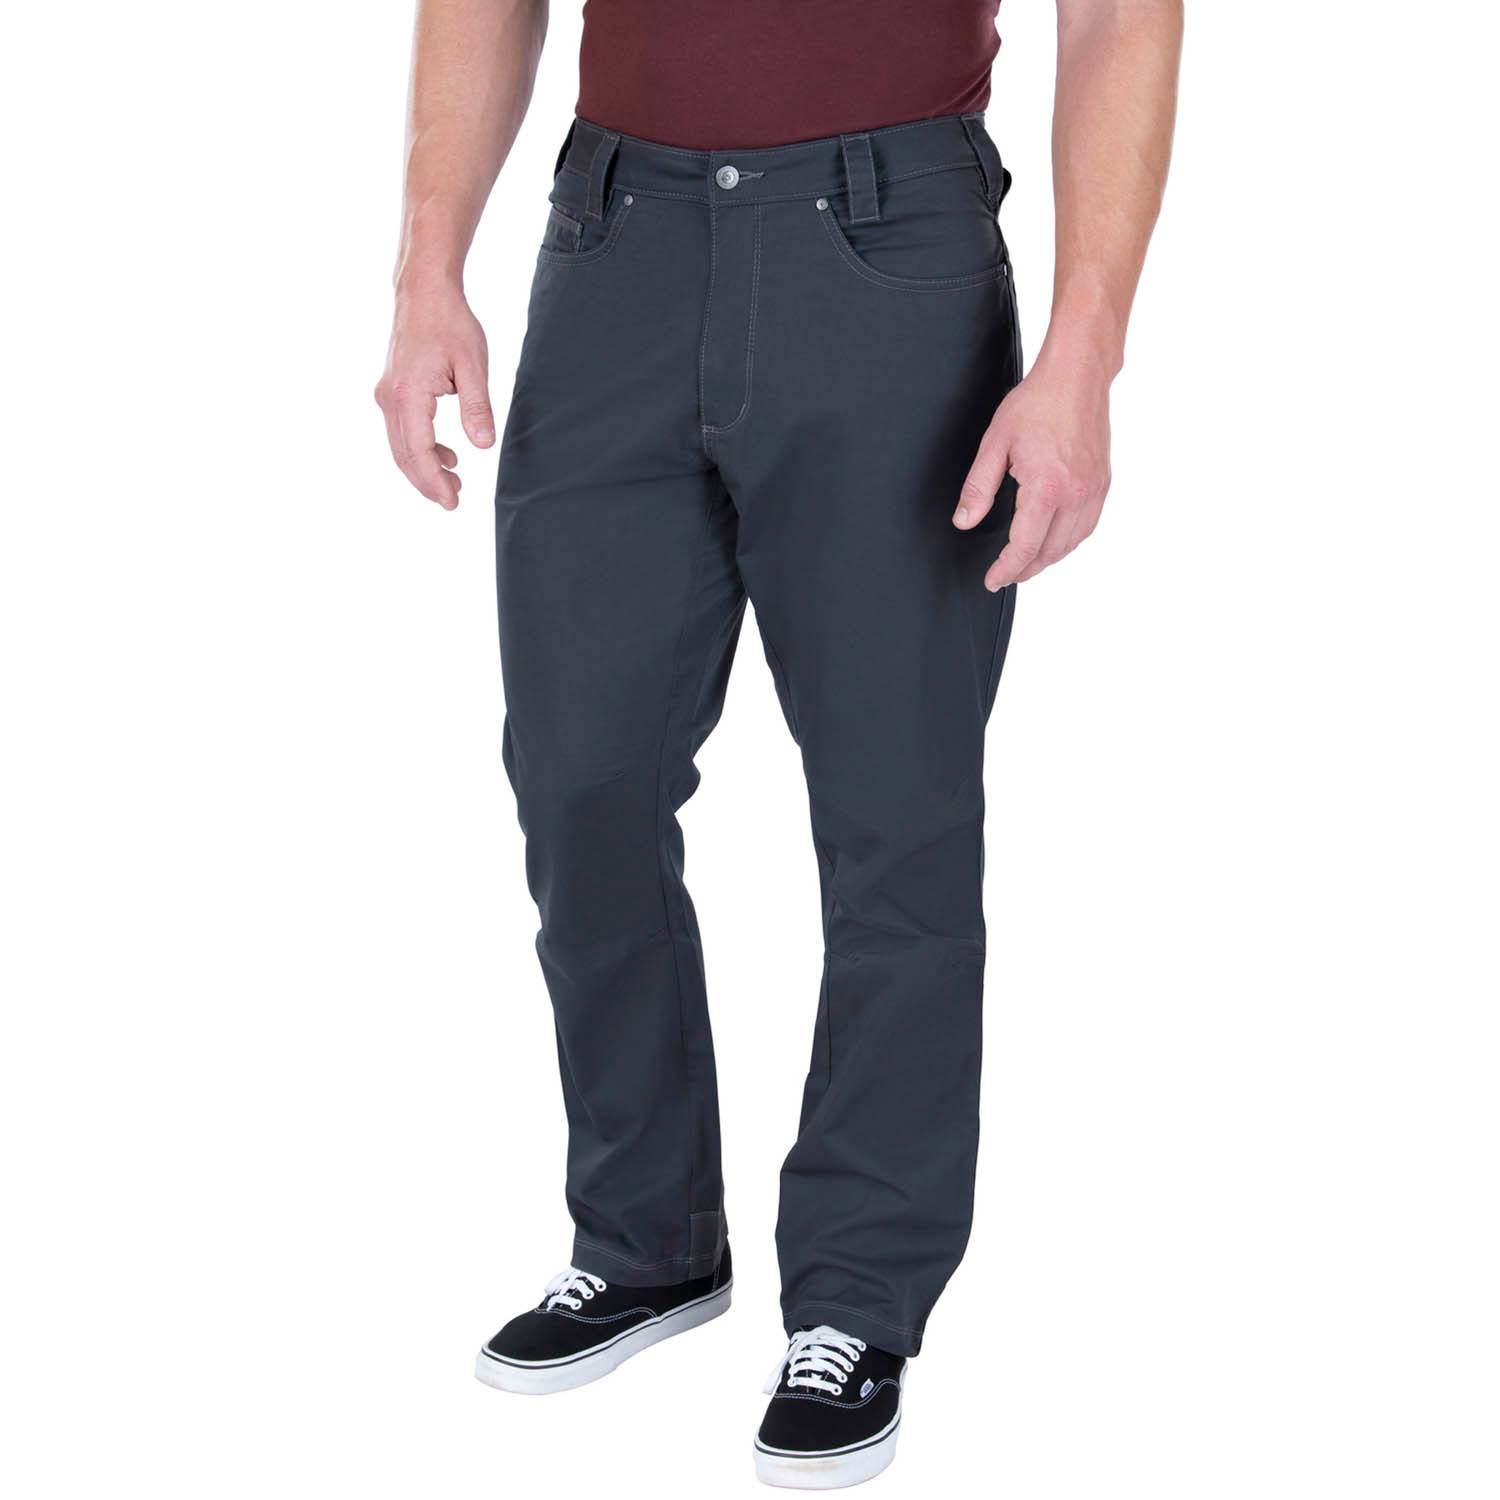 Vertx Cutback Pants | Covert Tactical Pants